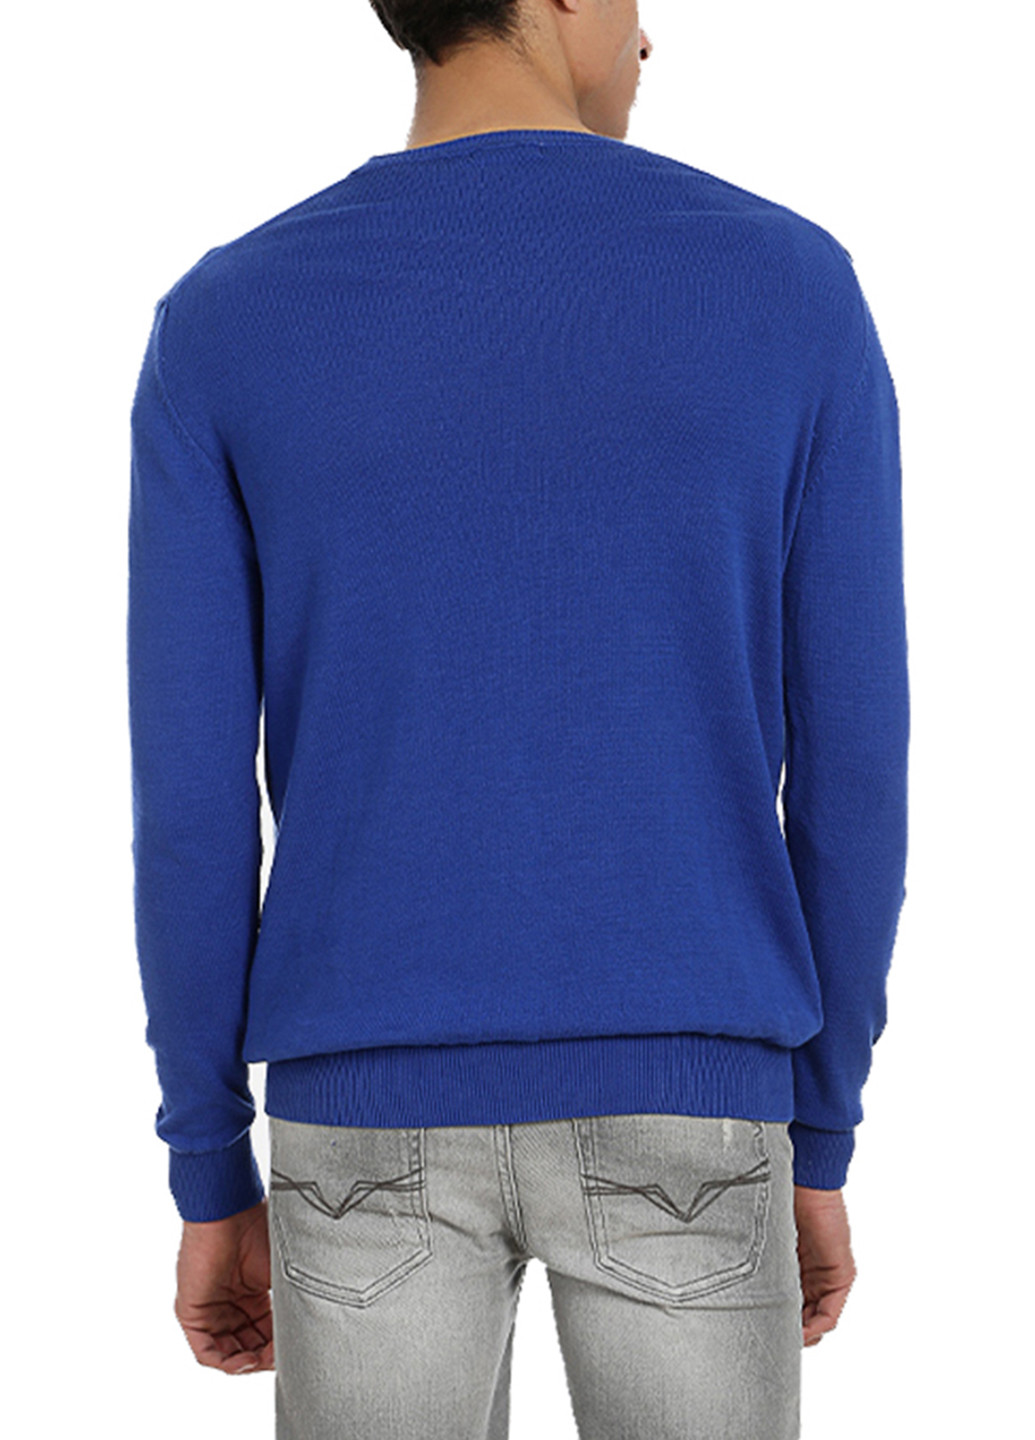 Синий демисезонный пуловер пуловер Яavin